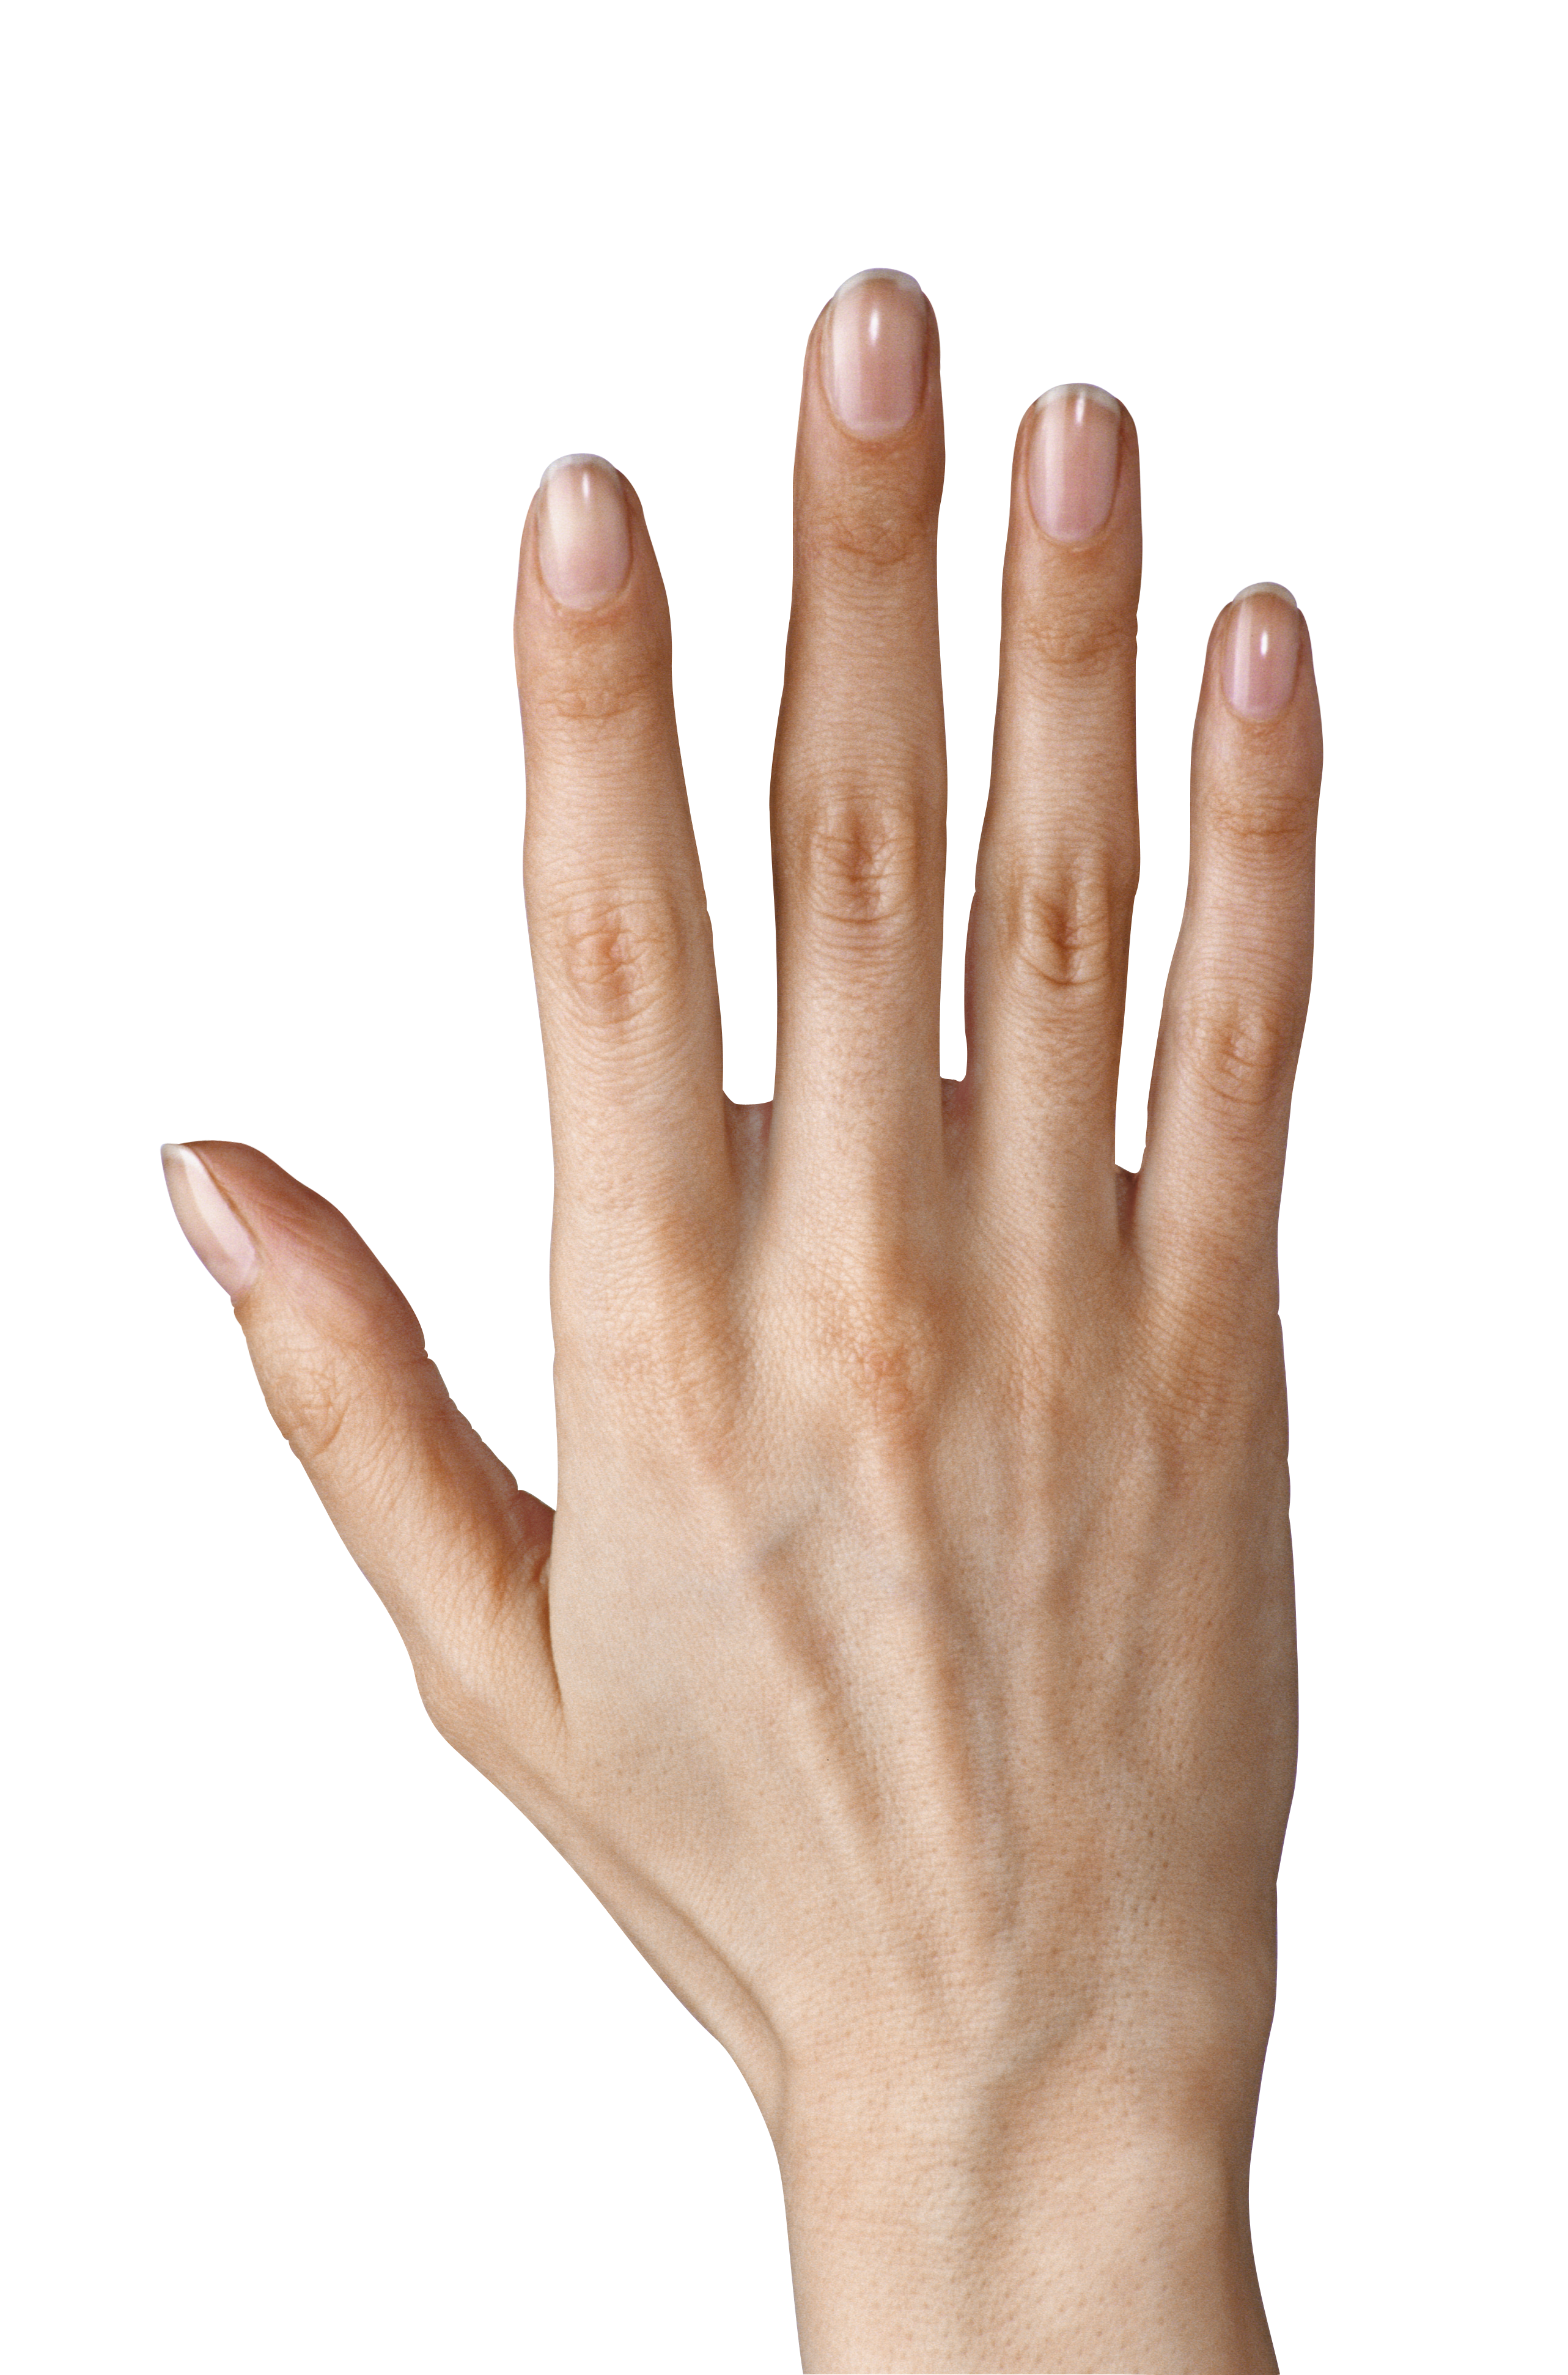 Finger clipart finger click. Hand showing five fingers